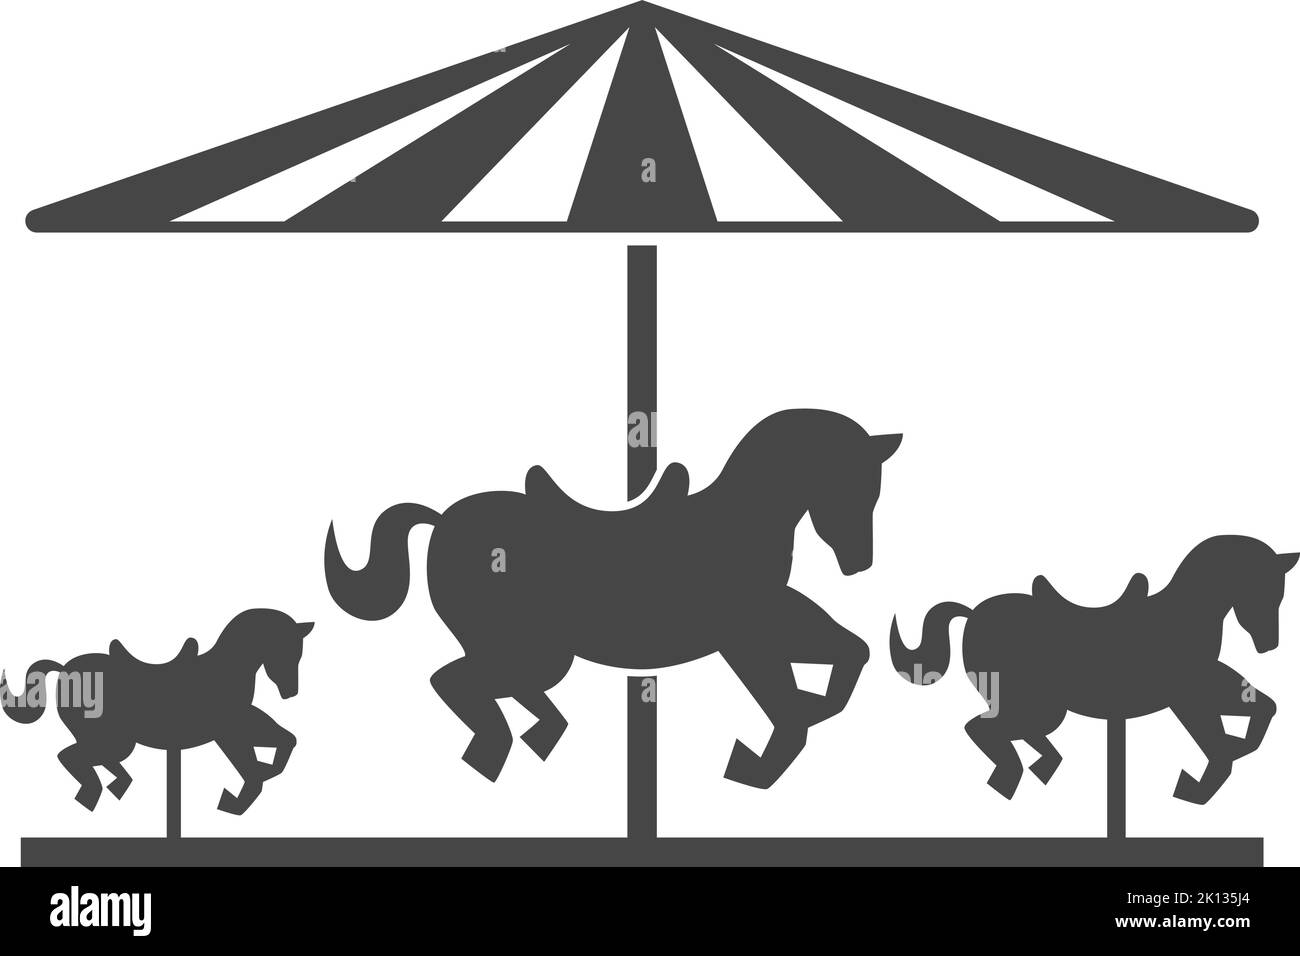 Merry-go-round icon. Black horse carnival ride silhouette Stock Vector